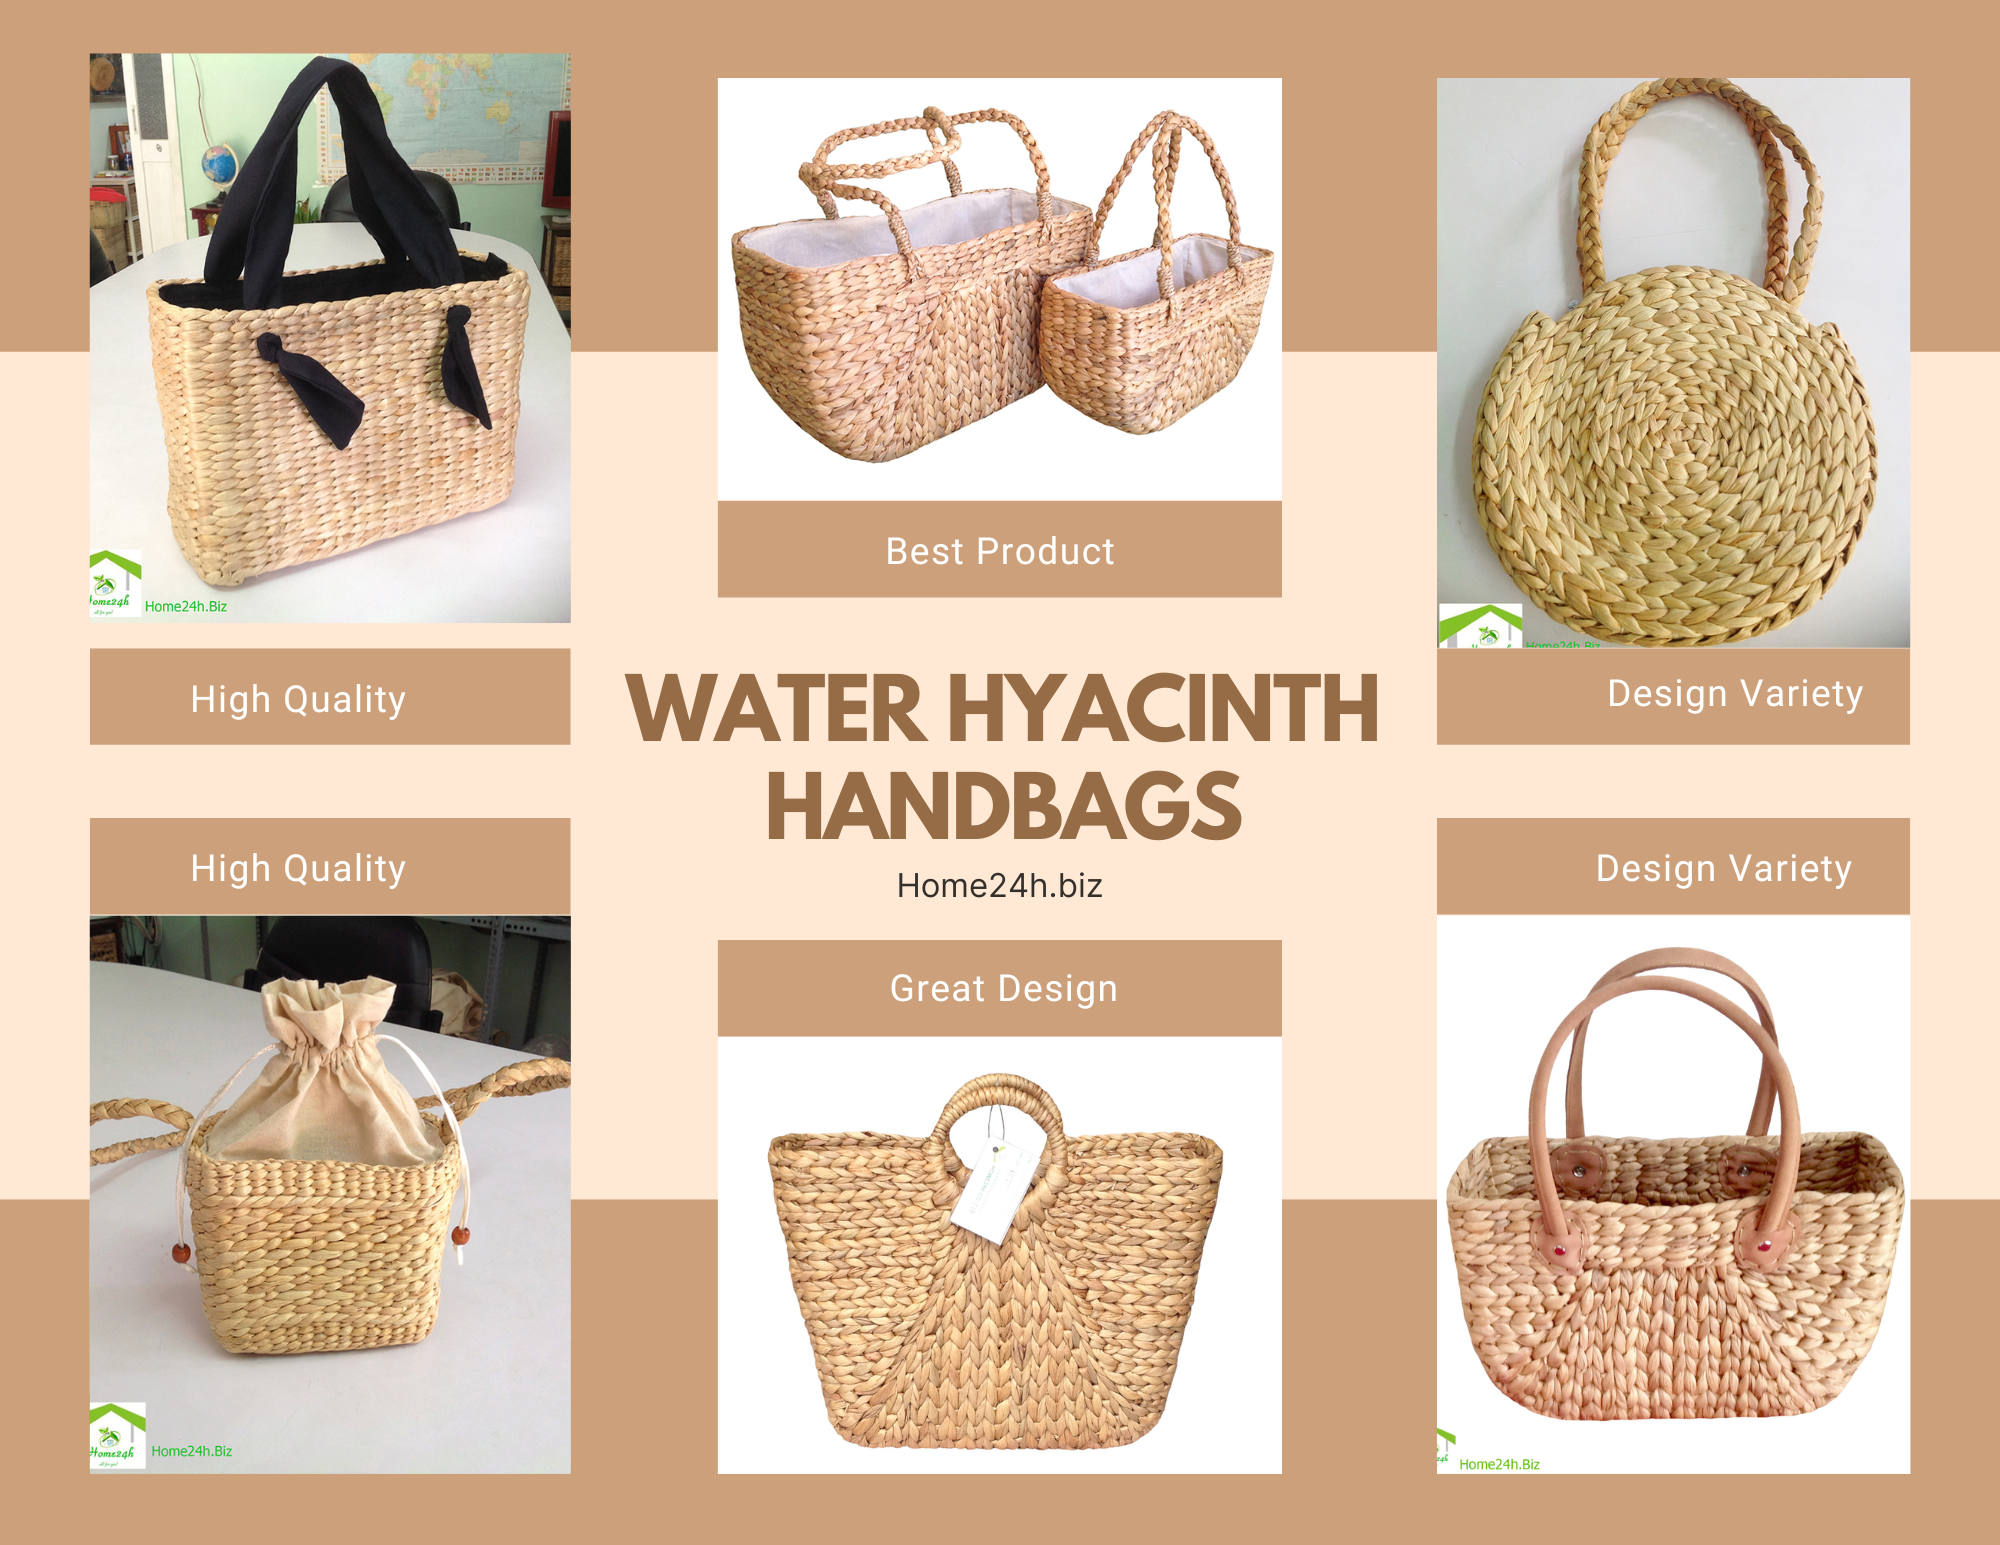 Water Hyacinth Handbags made by artisans